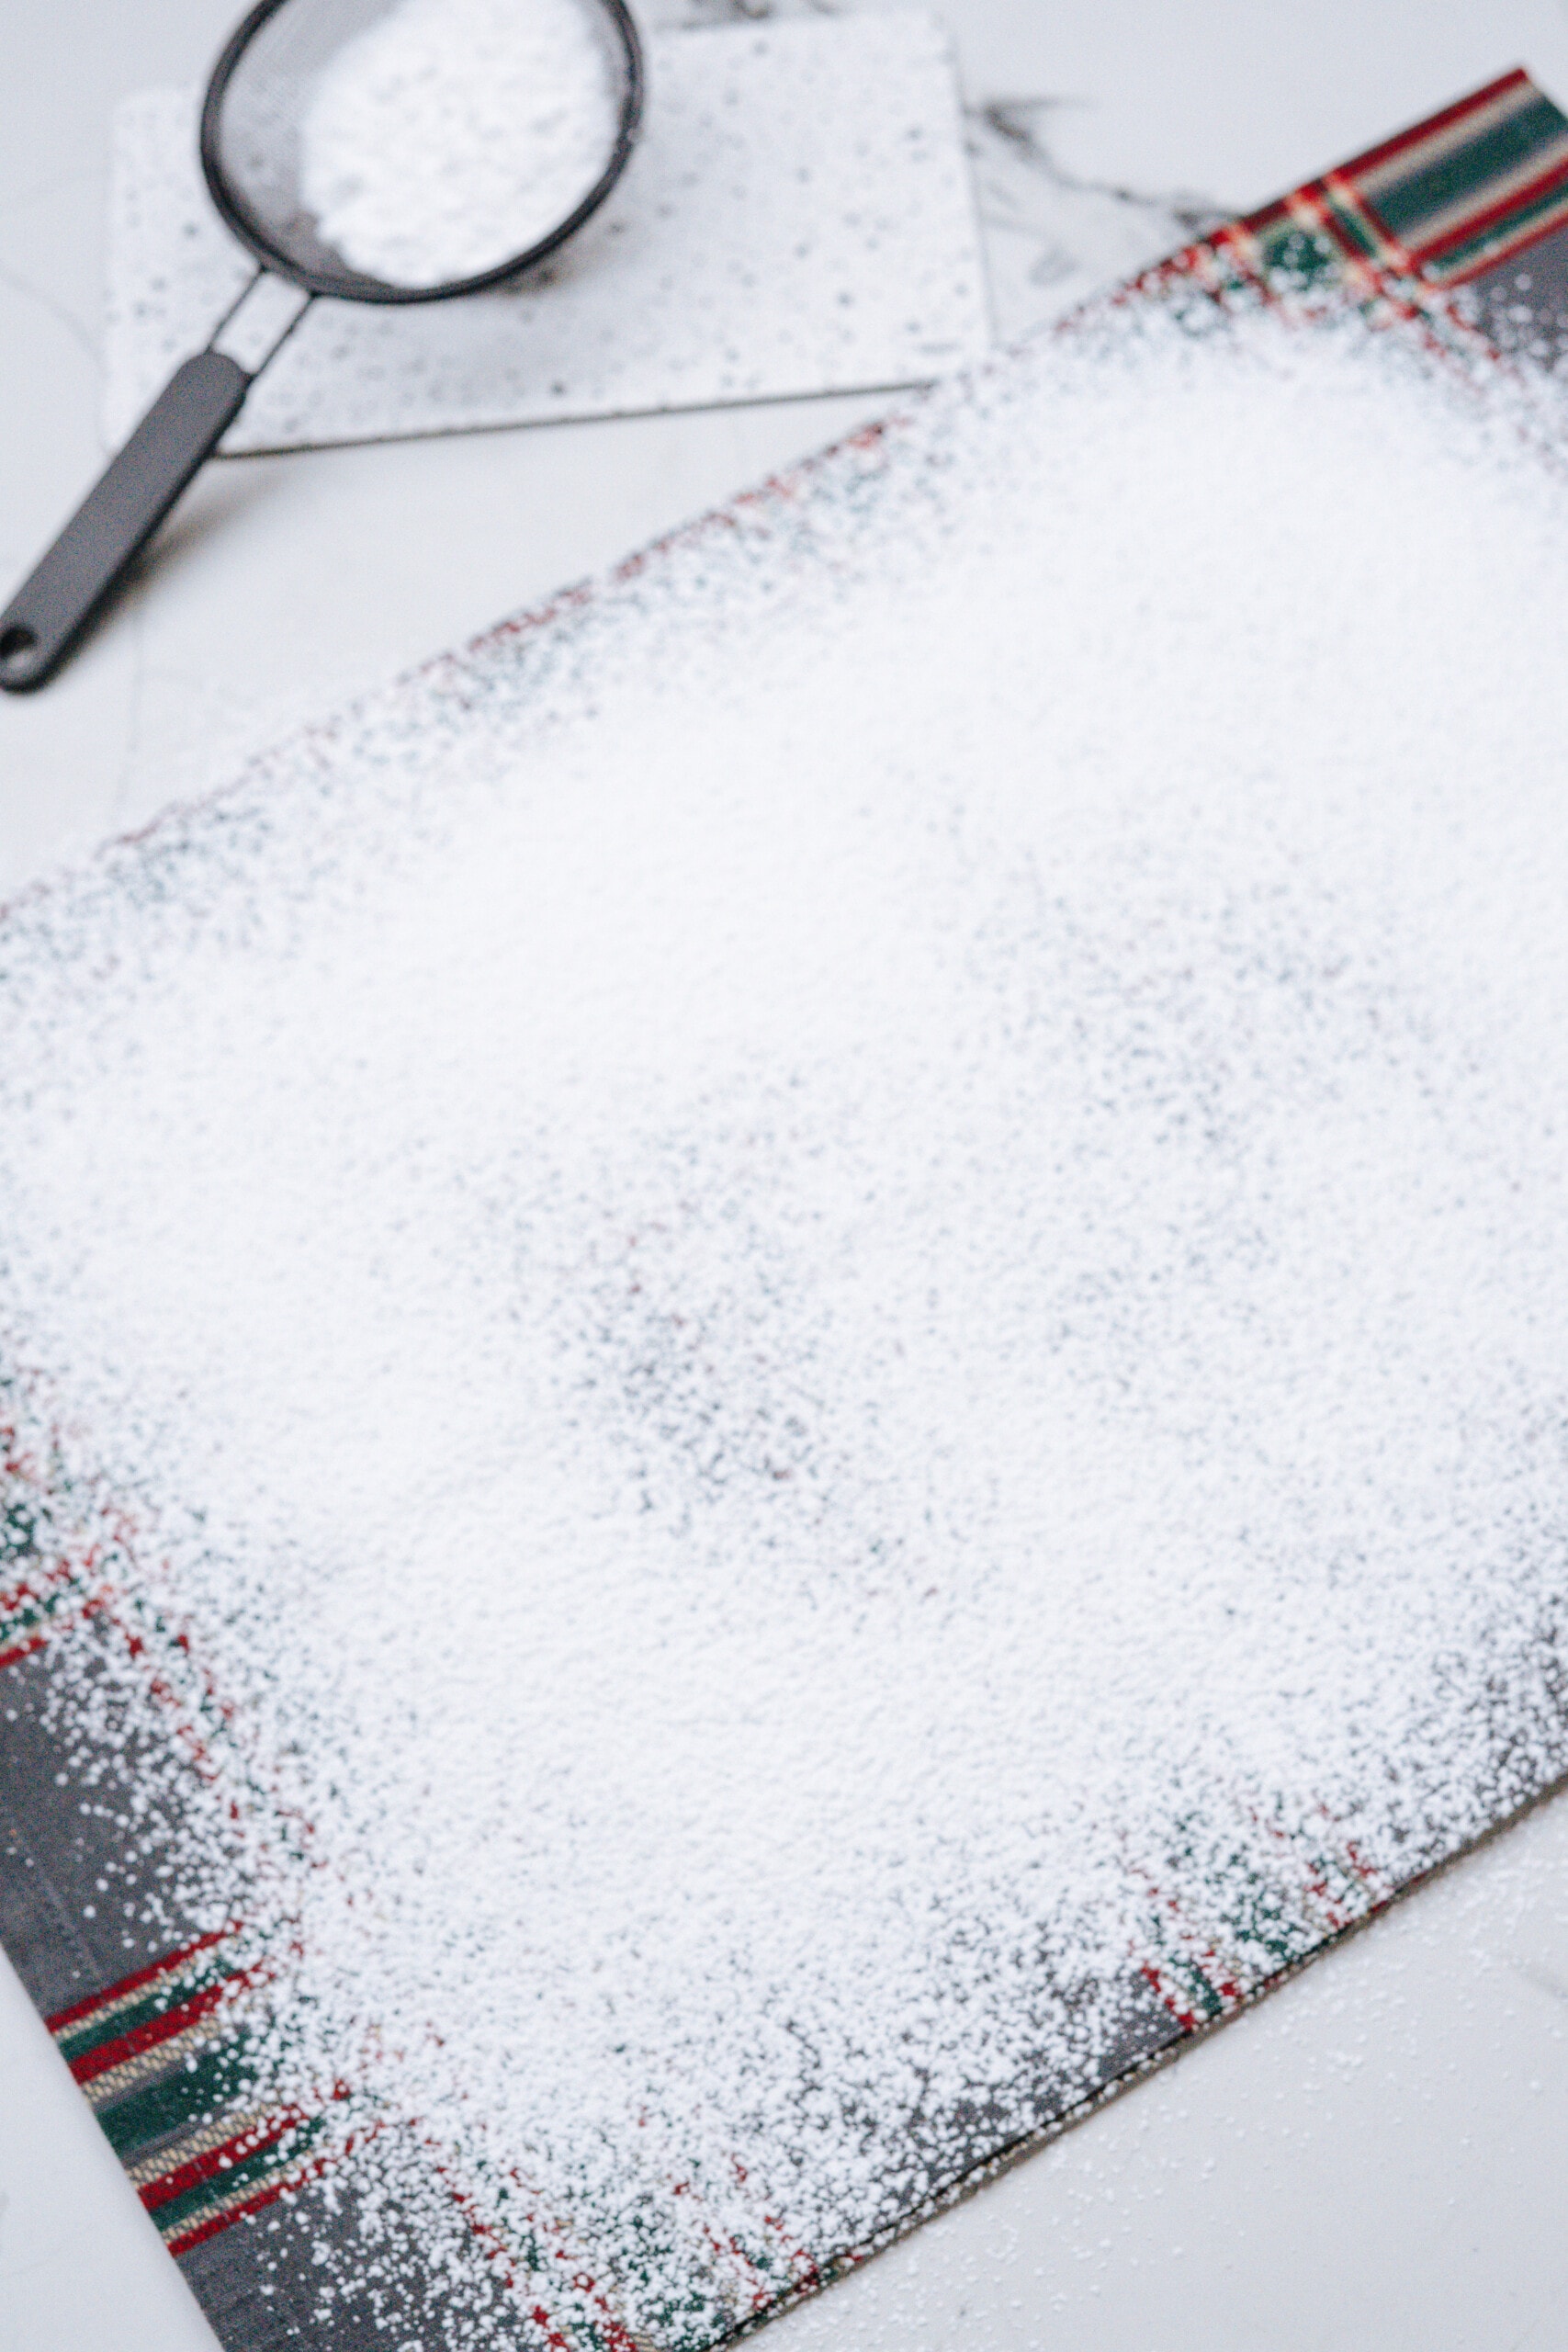 powdered sugar sprinkled across kitchen towel